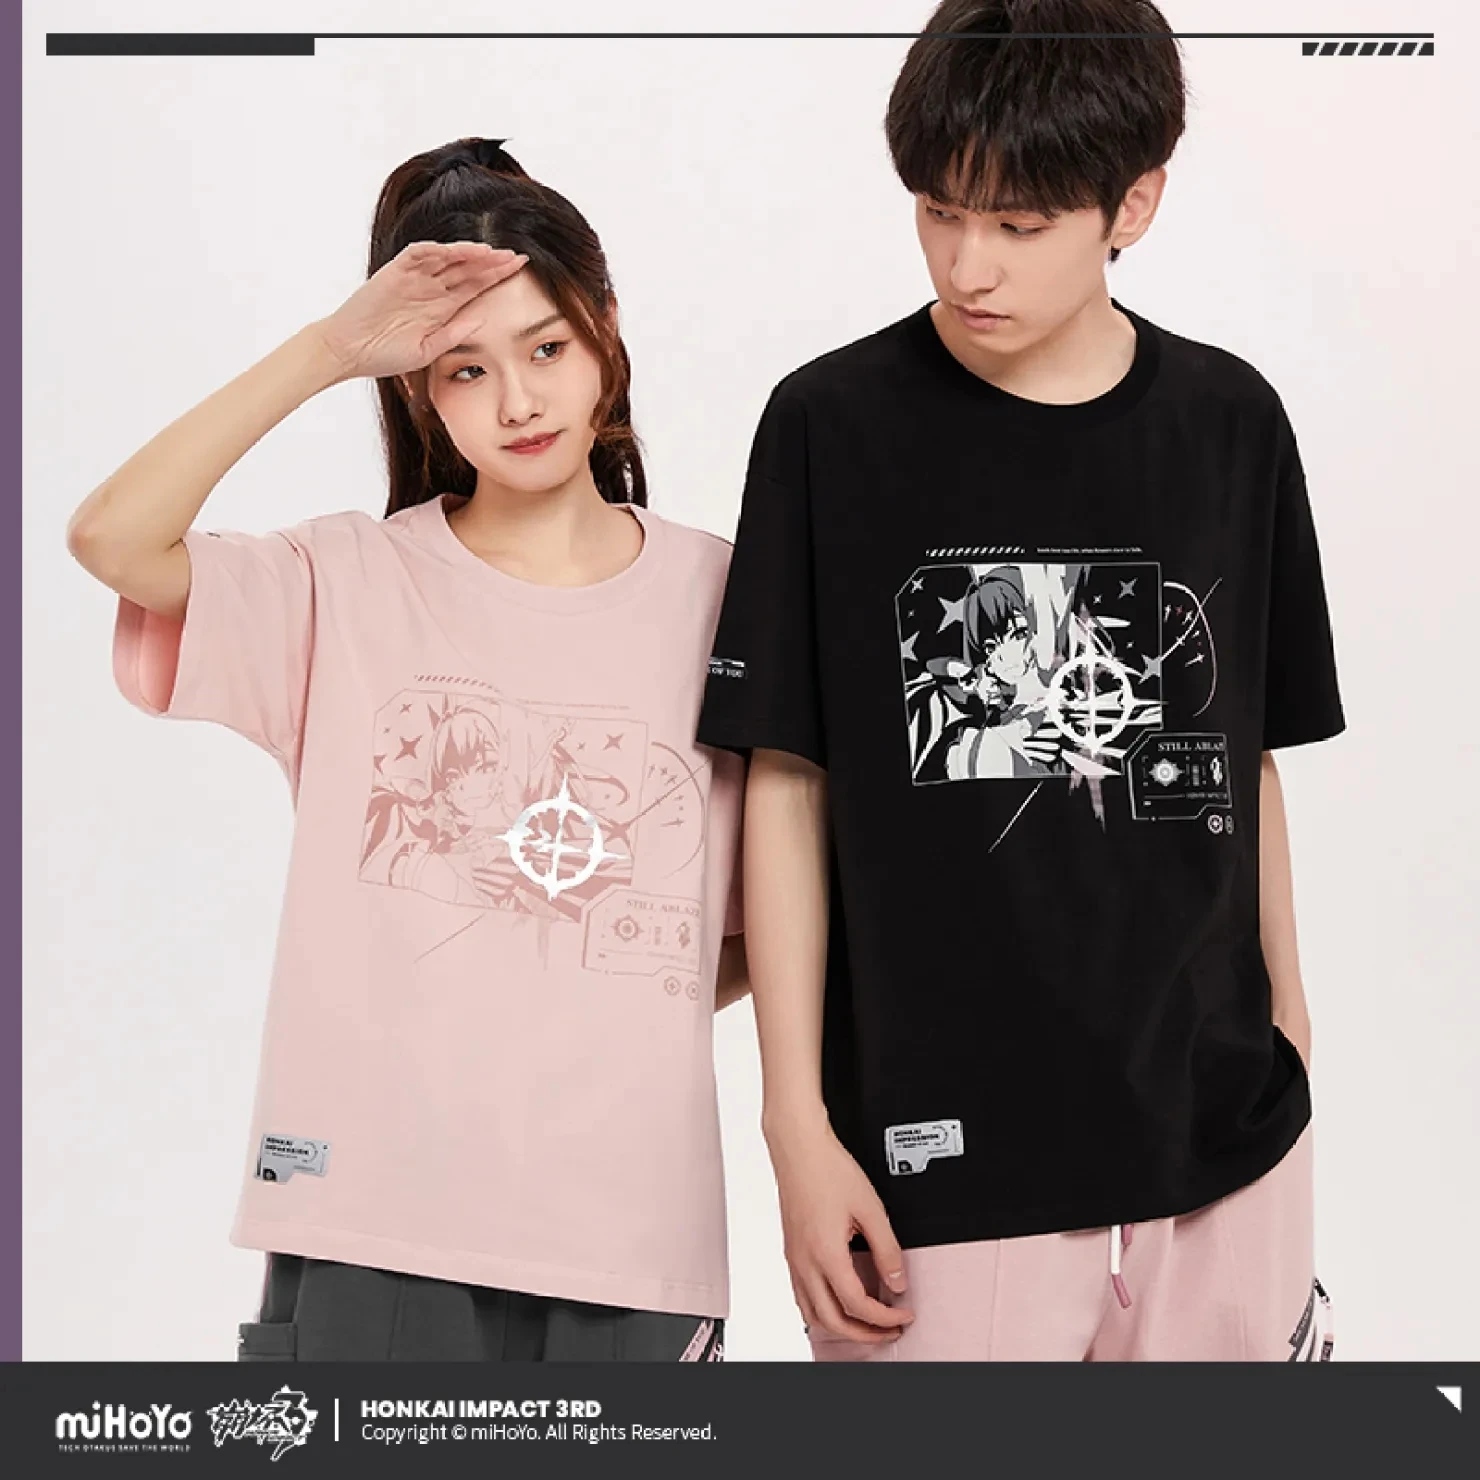 

MIHOYO Genuine Honkai Impact 3rd Elysia Because of Uou Impression Theme T-shirt Anime Game Cosplay Couple Short Sleeve Top Gift